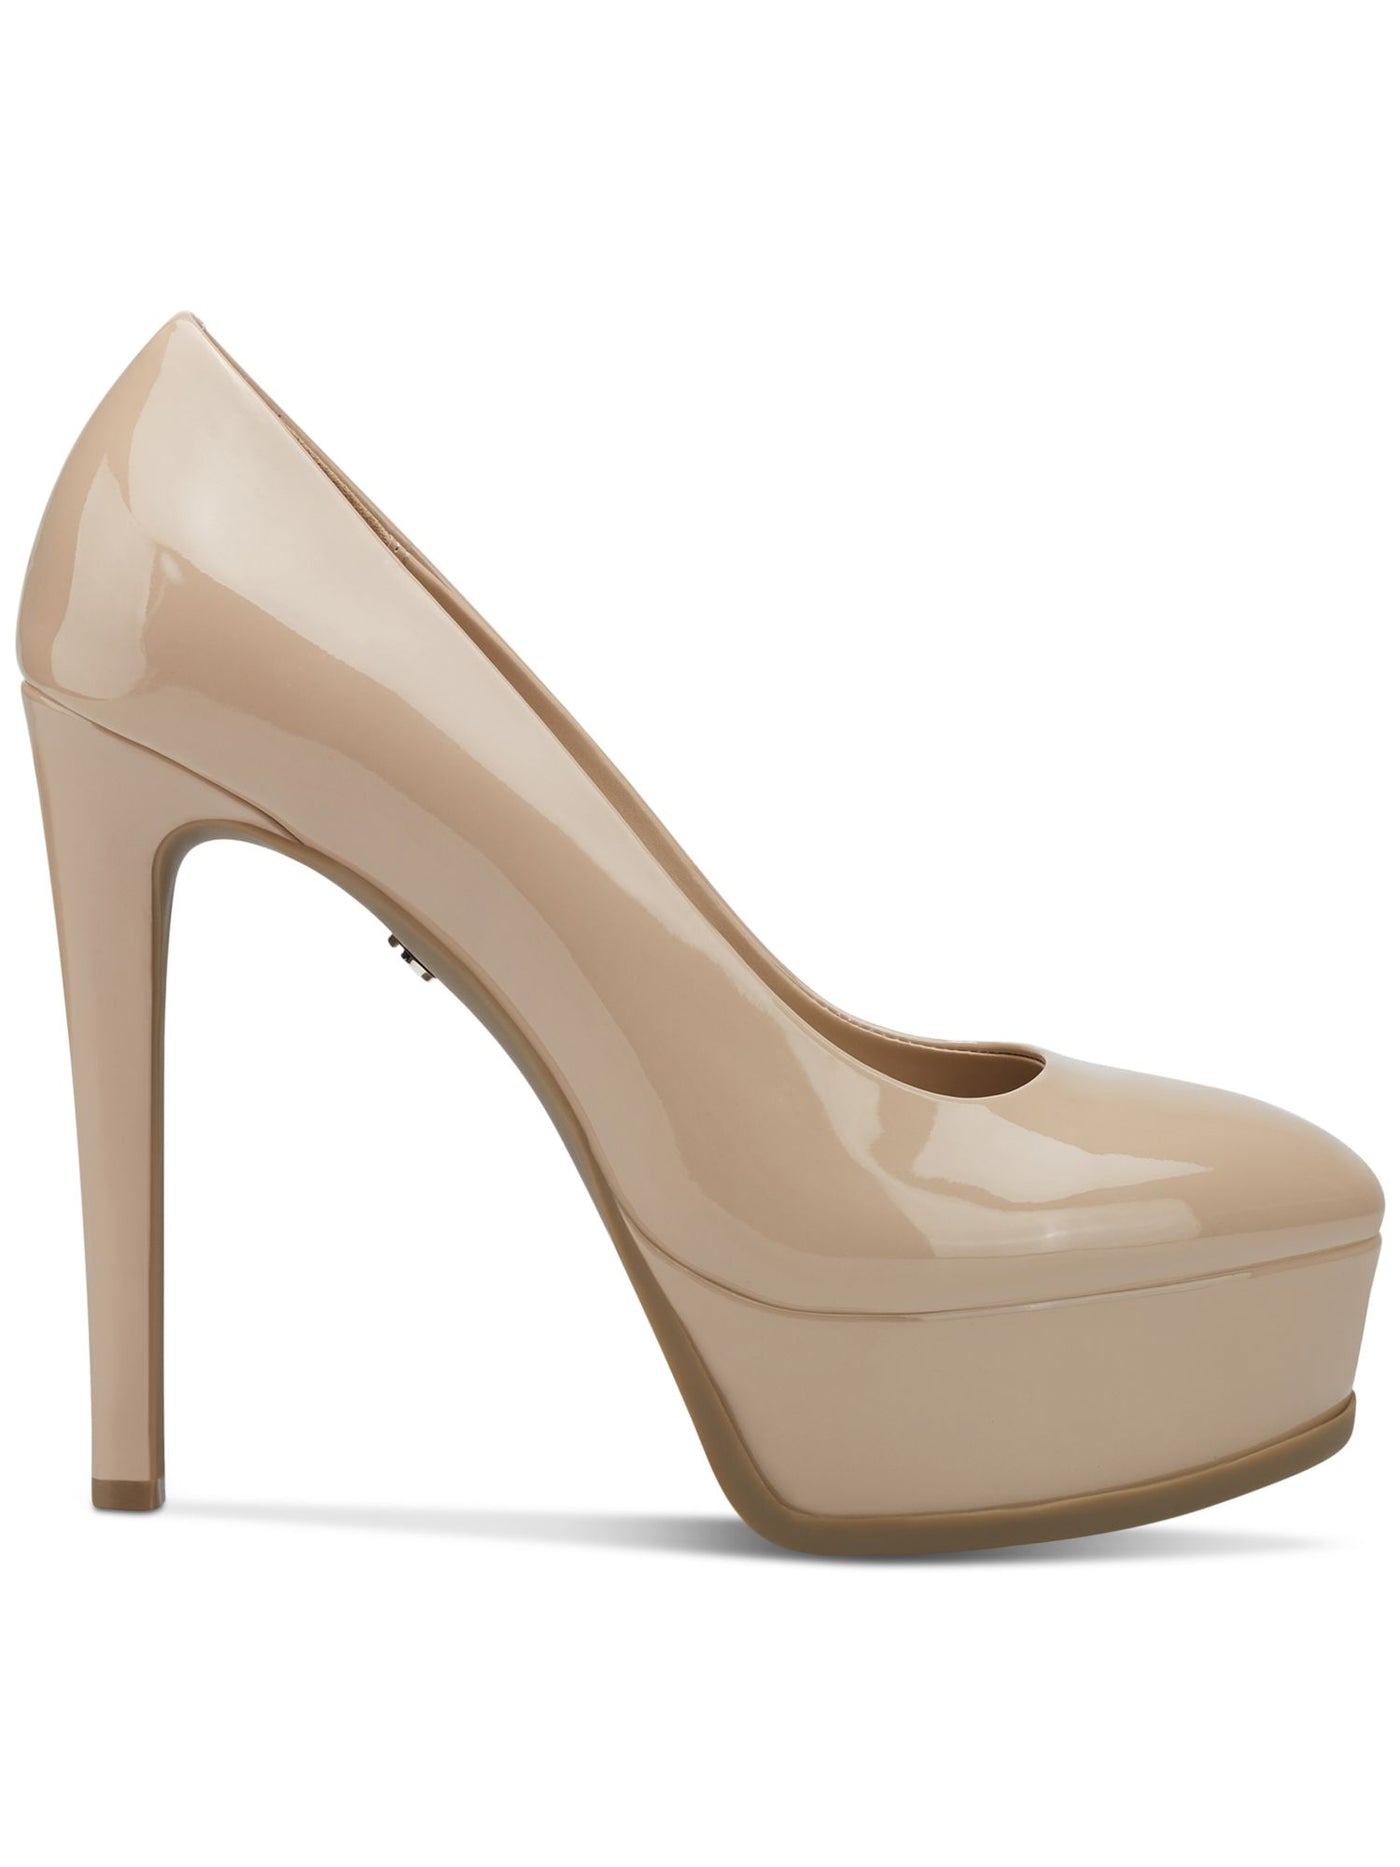 THALIA SODI Womens Beige 1-1/2" Platform Padded Stasia Almond Toe Stiletto Slip On Dress Pumps Shoes 6 M